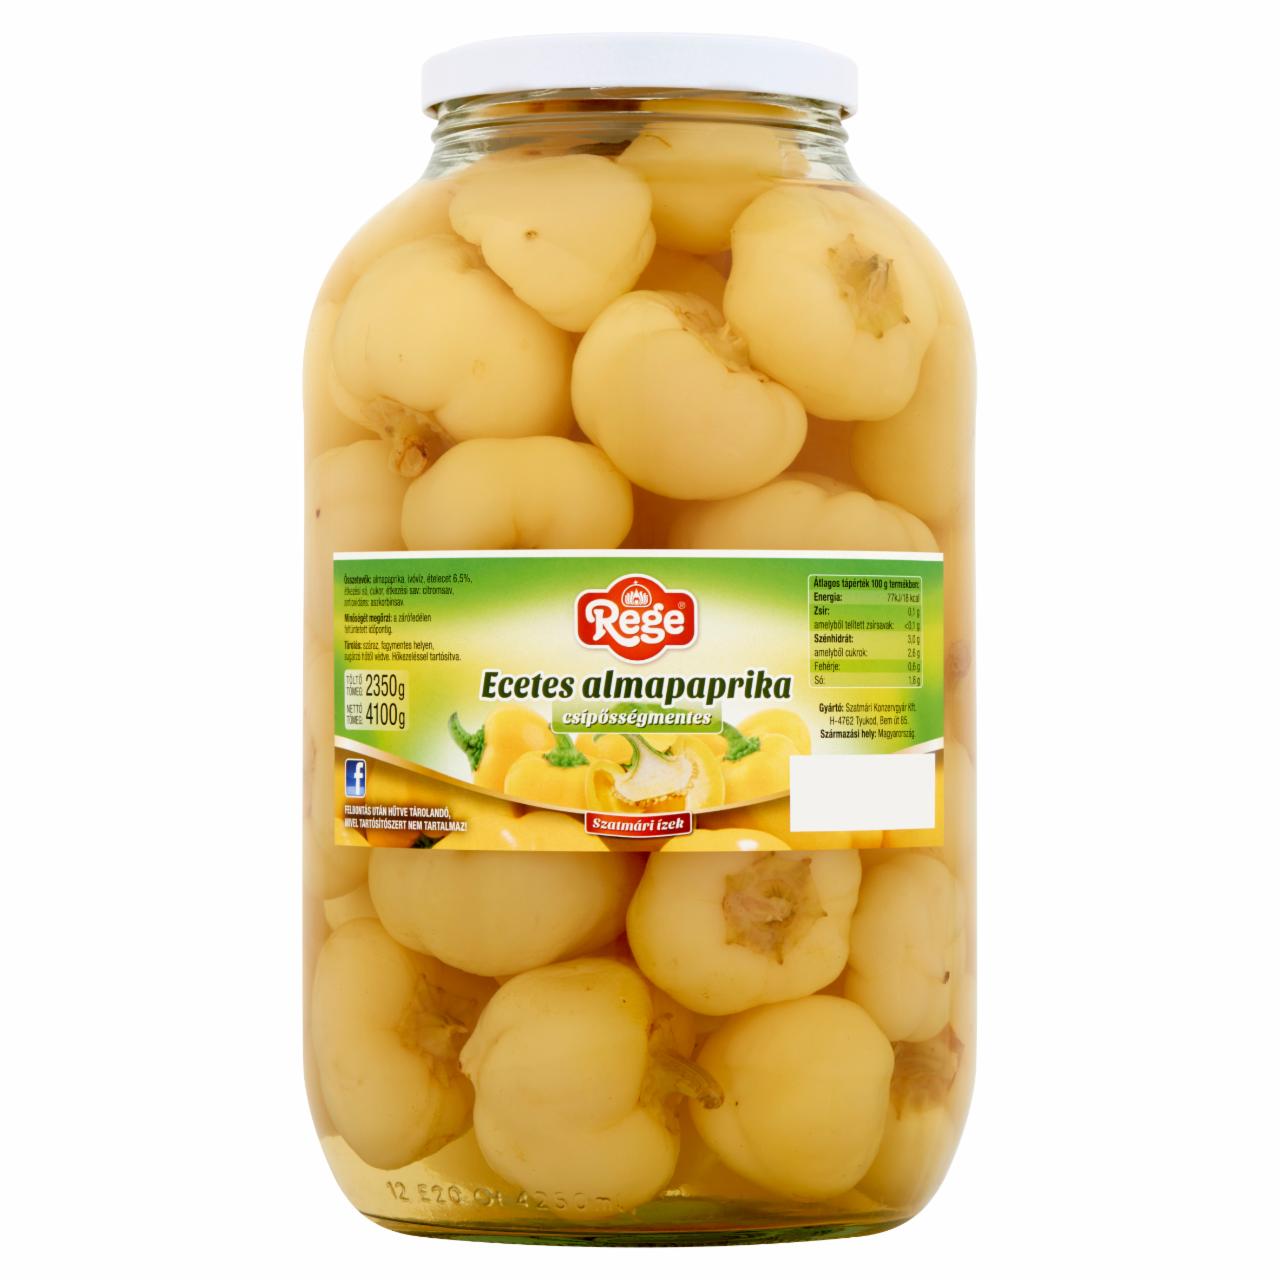 Képek - Rege csípősségmentes ecetes almapaprika 4100 g